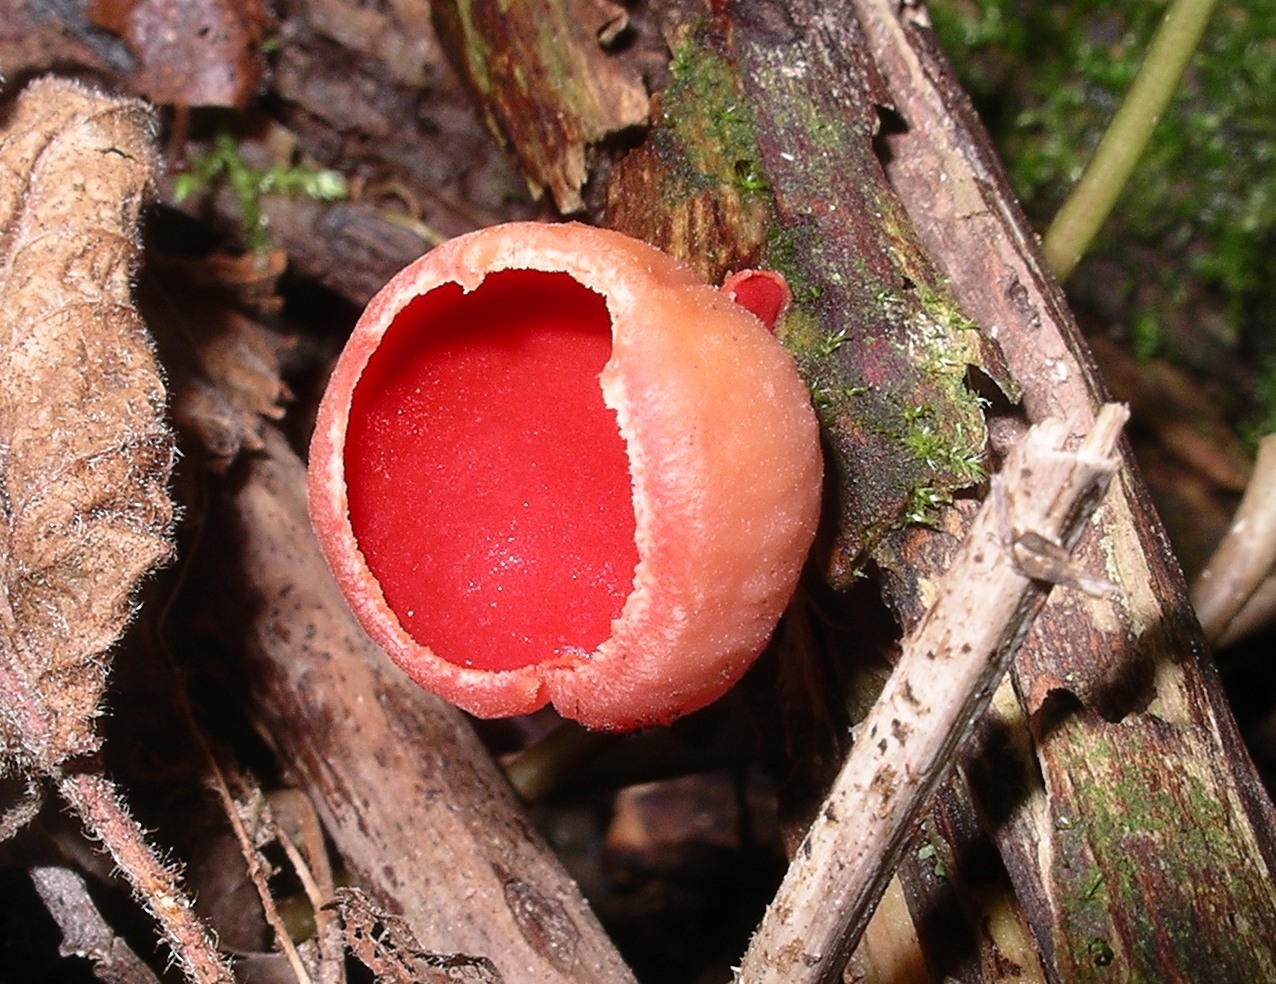 Scarlet elf cap is both an edible and medicinal fungus